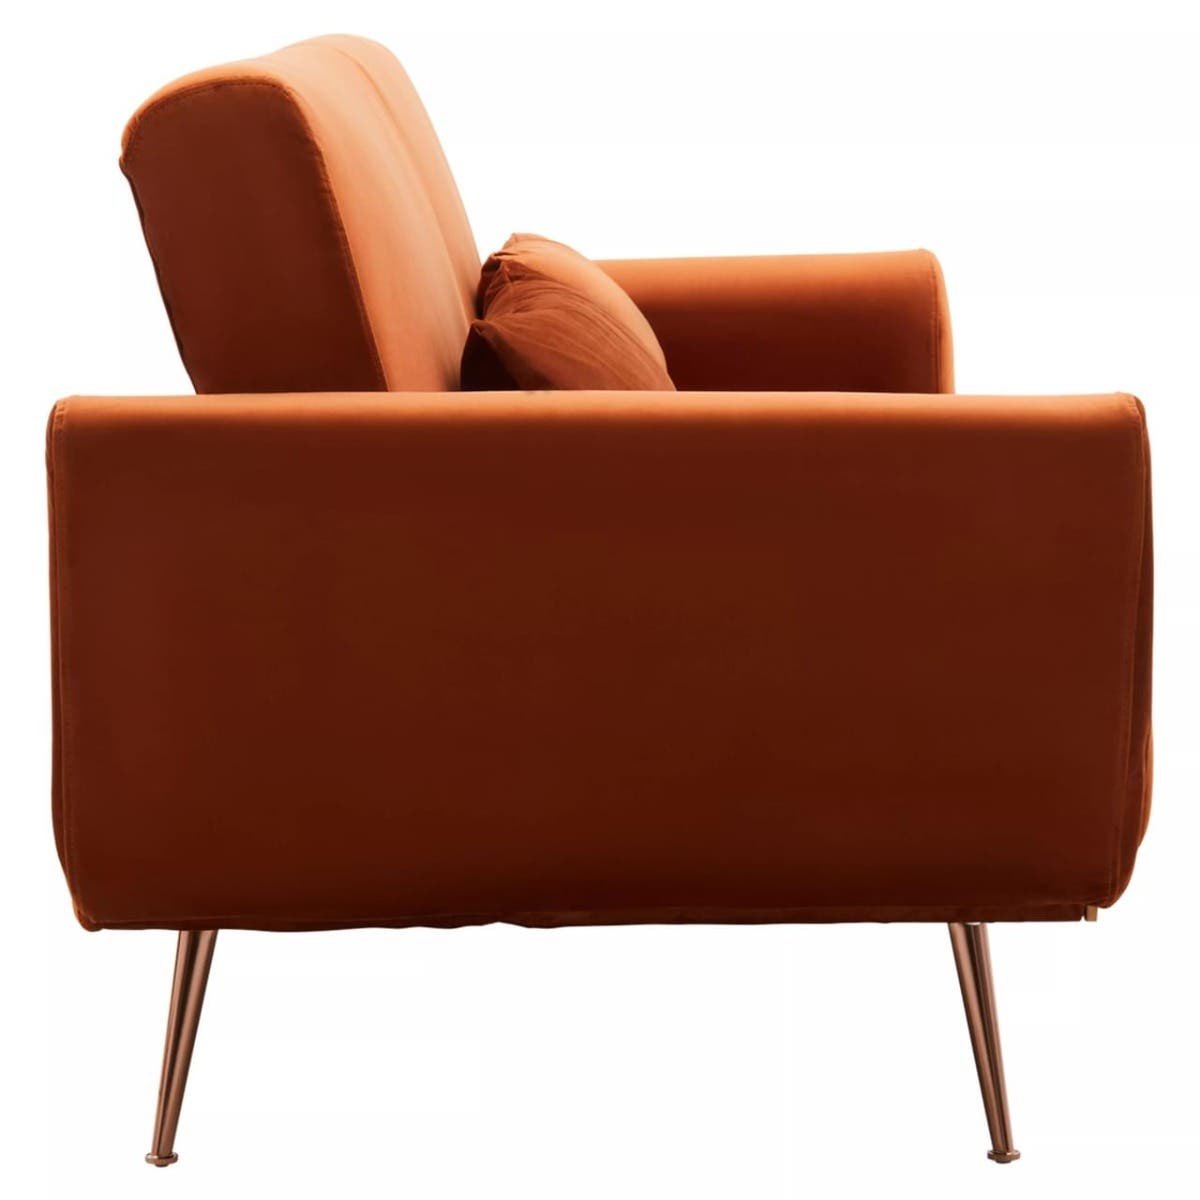 Odelia Saffron Orange Modern Sofa Bed With Rose Gold Legs